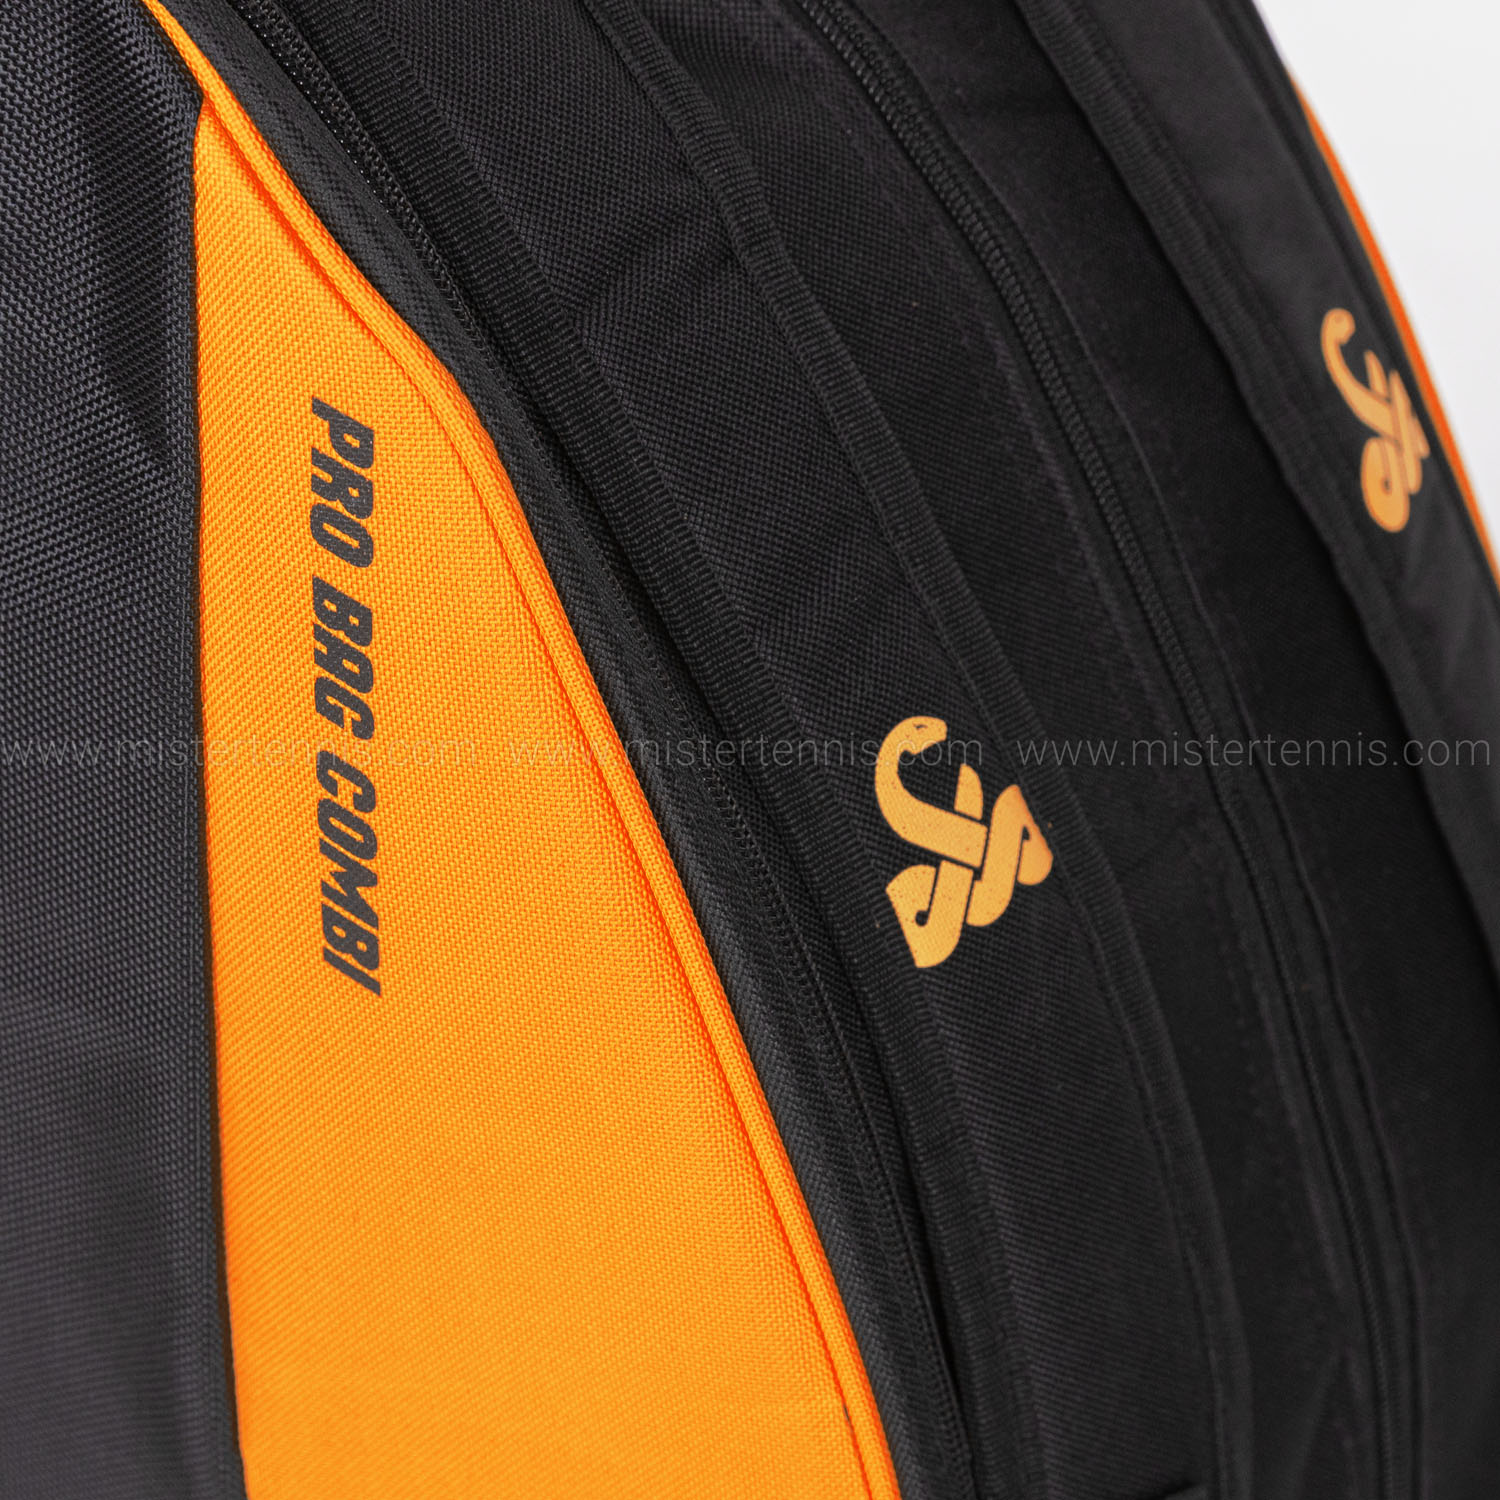 Vibor-A Pro Combi Bag - Black/Orange